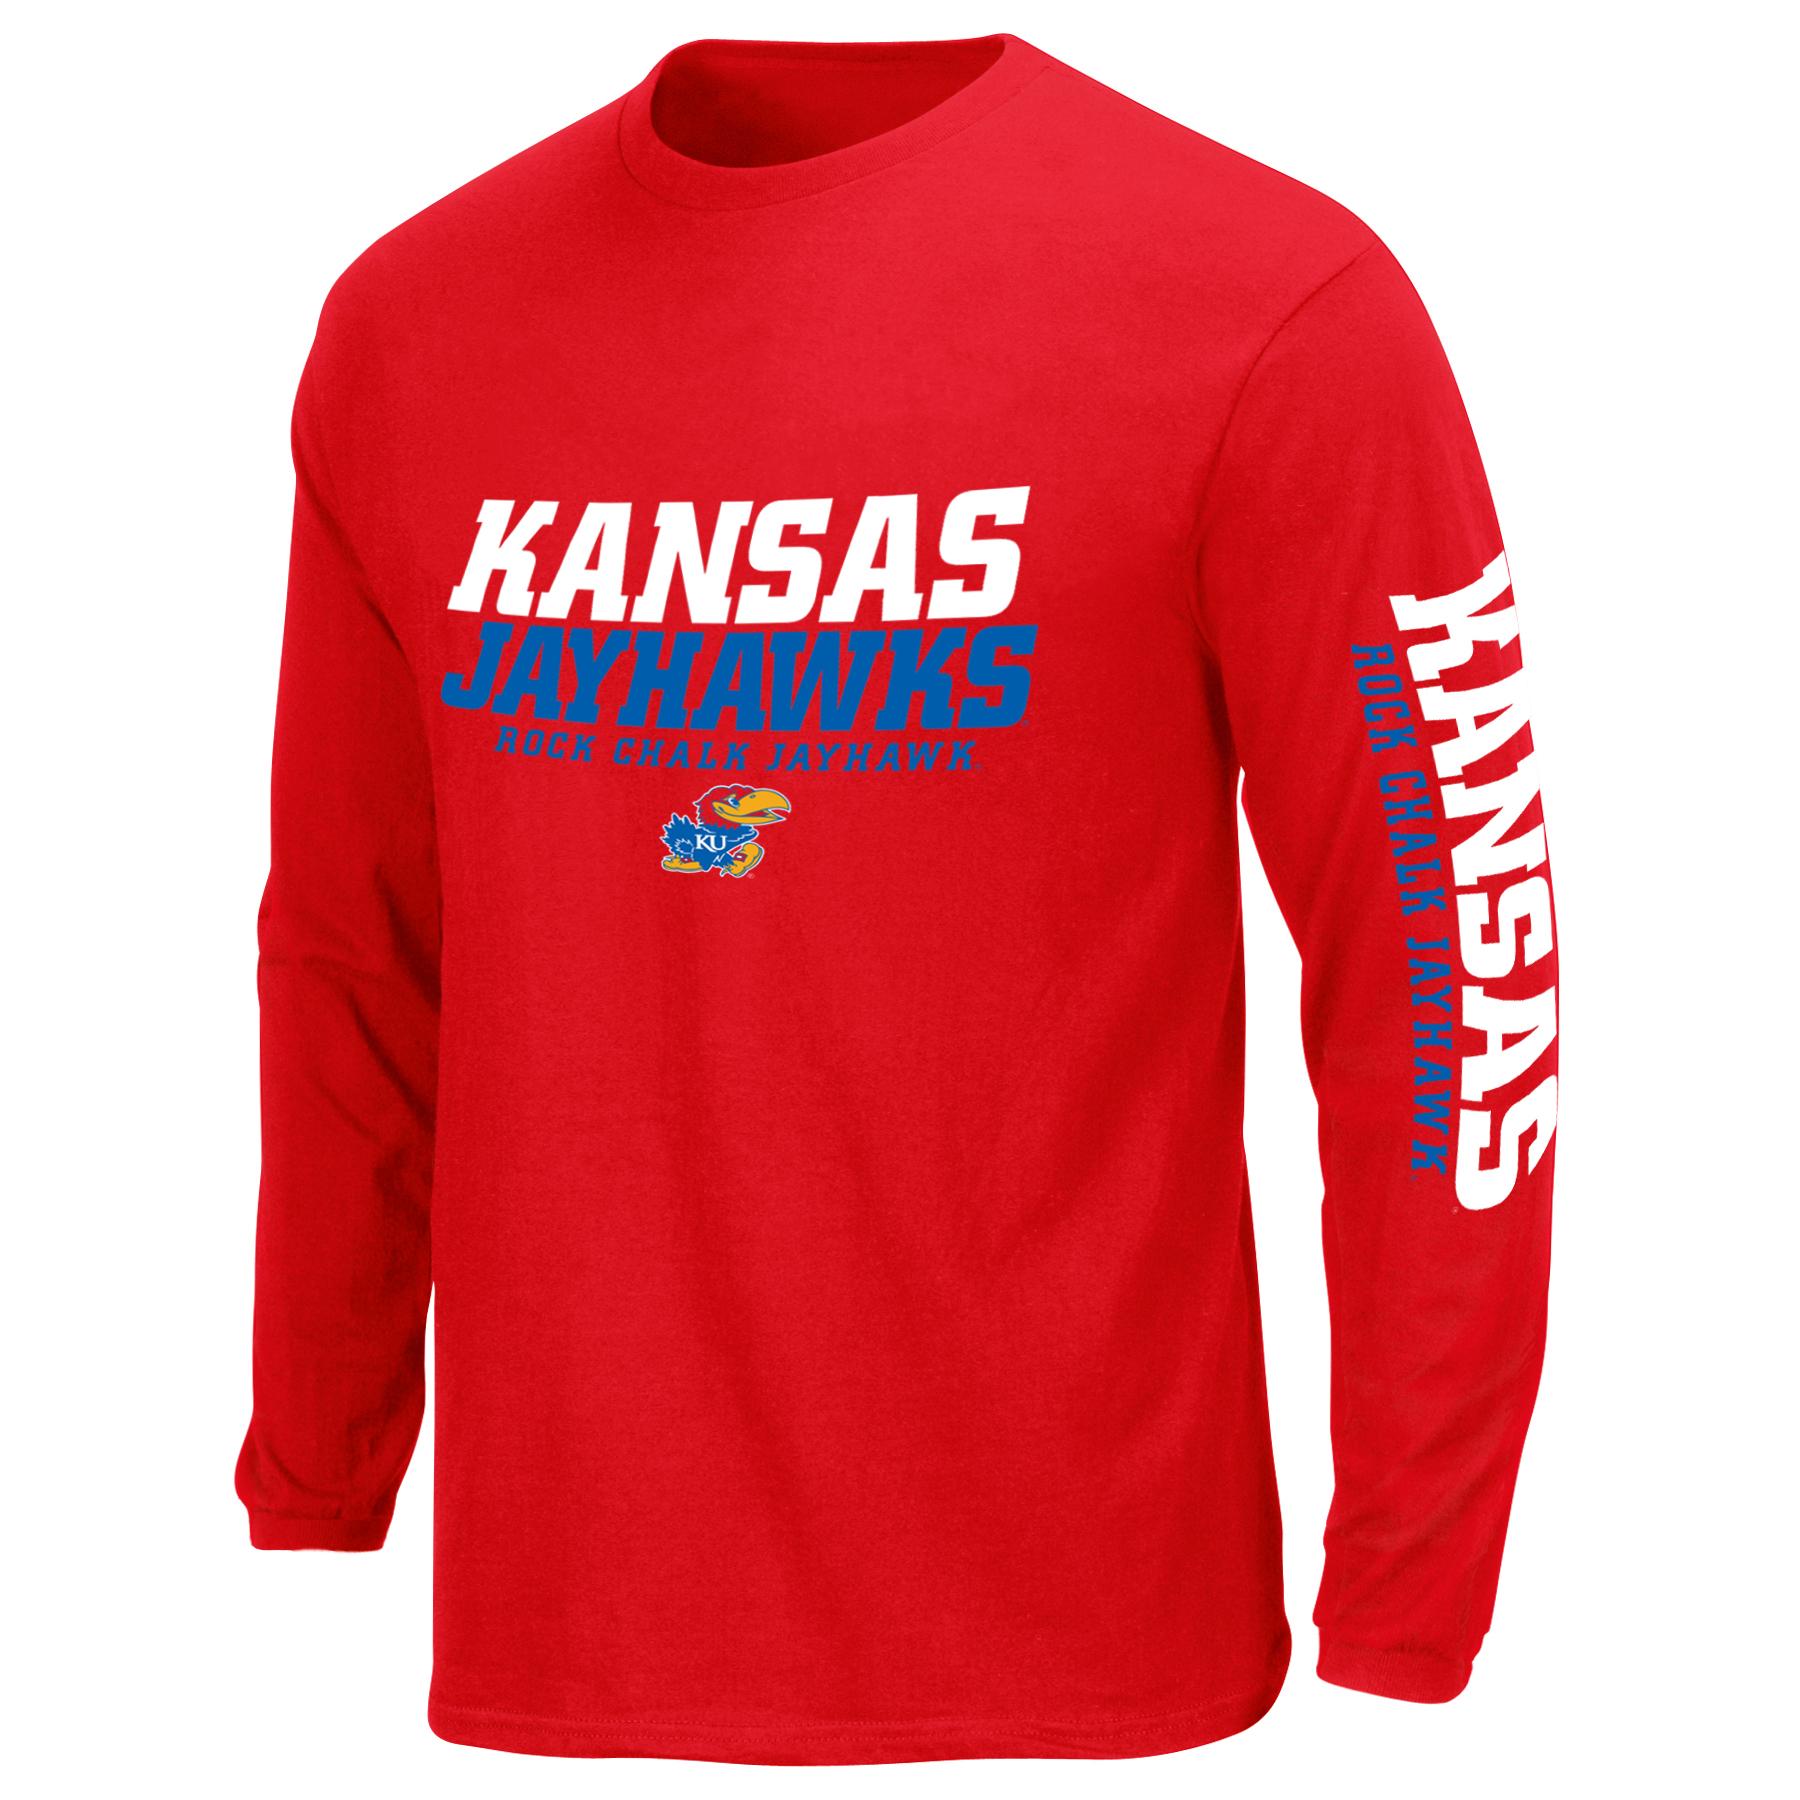 NCAA Men's Big & Tall Long-Sleeve T-Shirt - Kansas Jayhawks